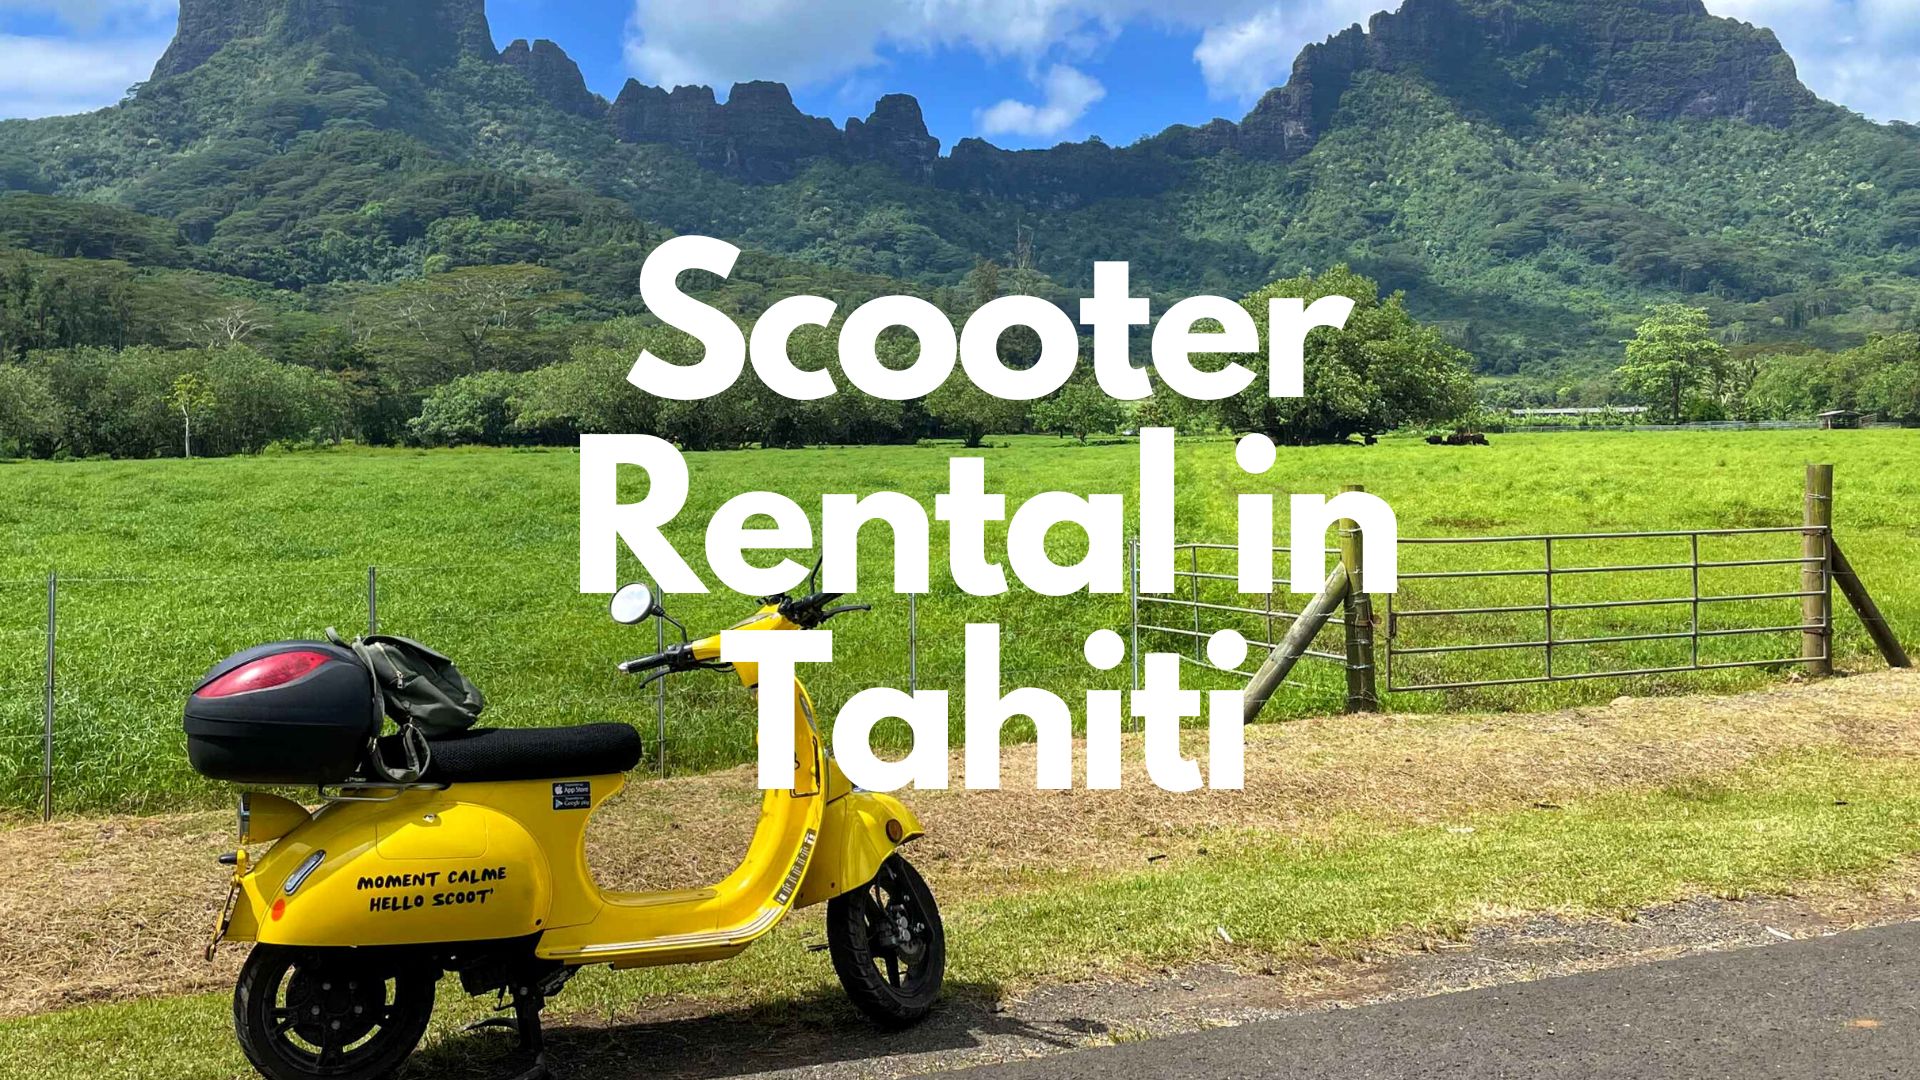 Scooter rental in Tahiti, Scooter rental in Moorea, Hello Scoot rental in Tahiti, electric scooter rental in Tahiti